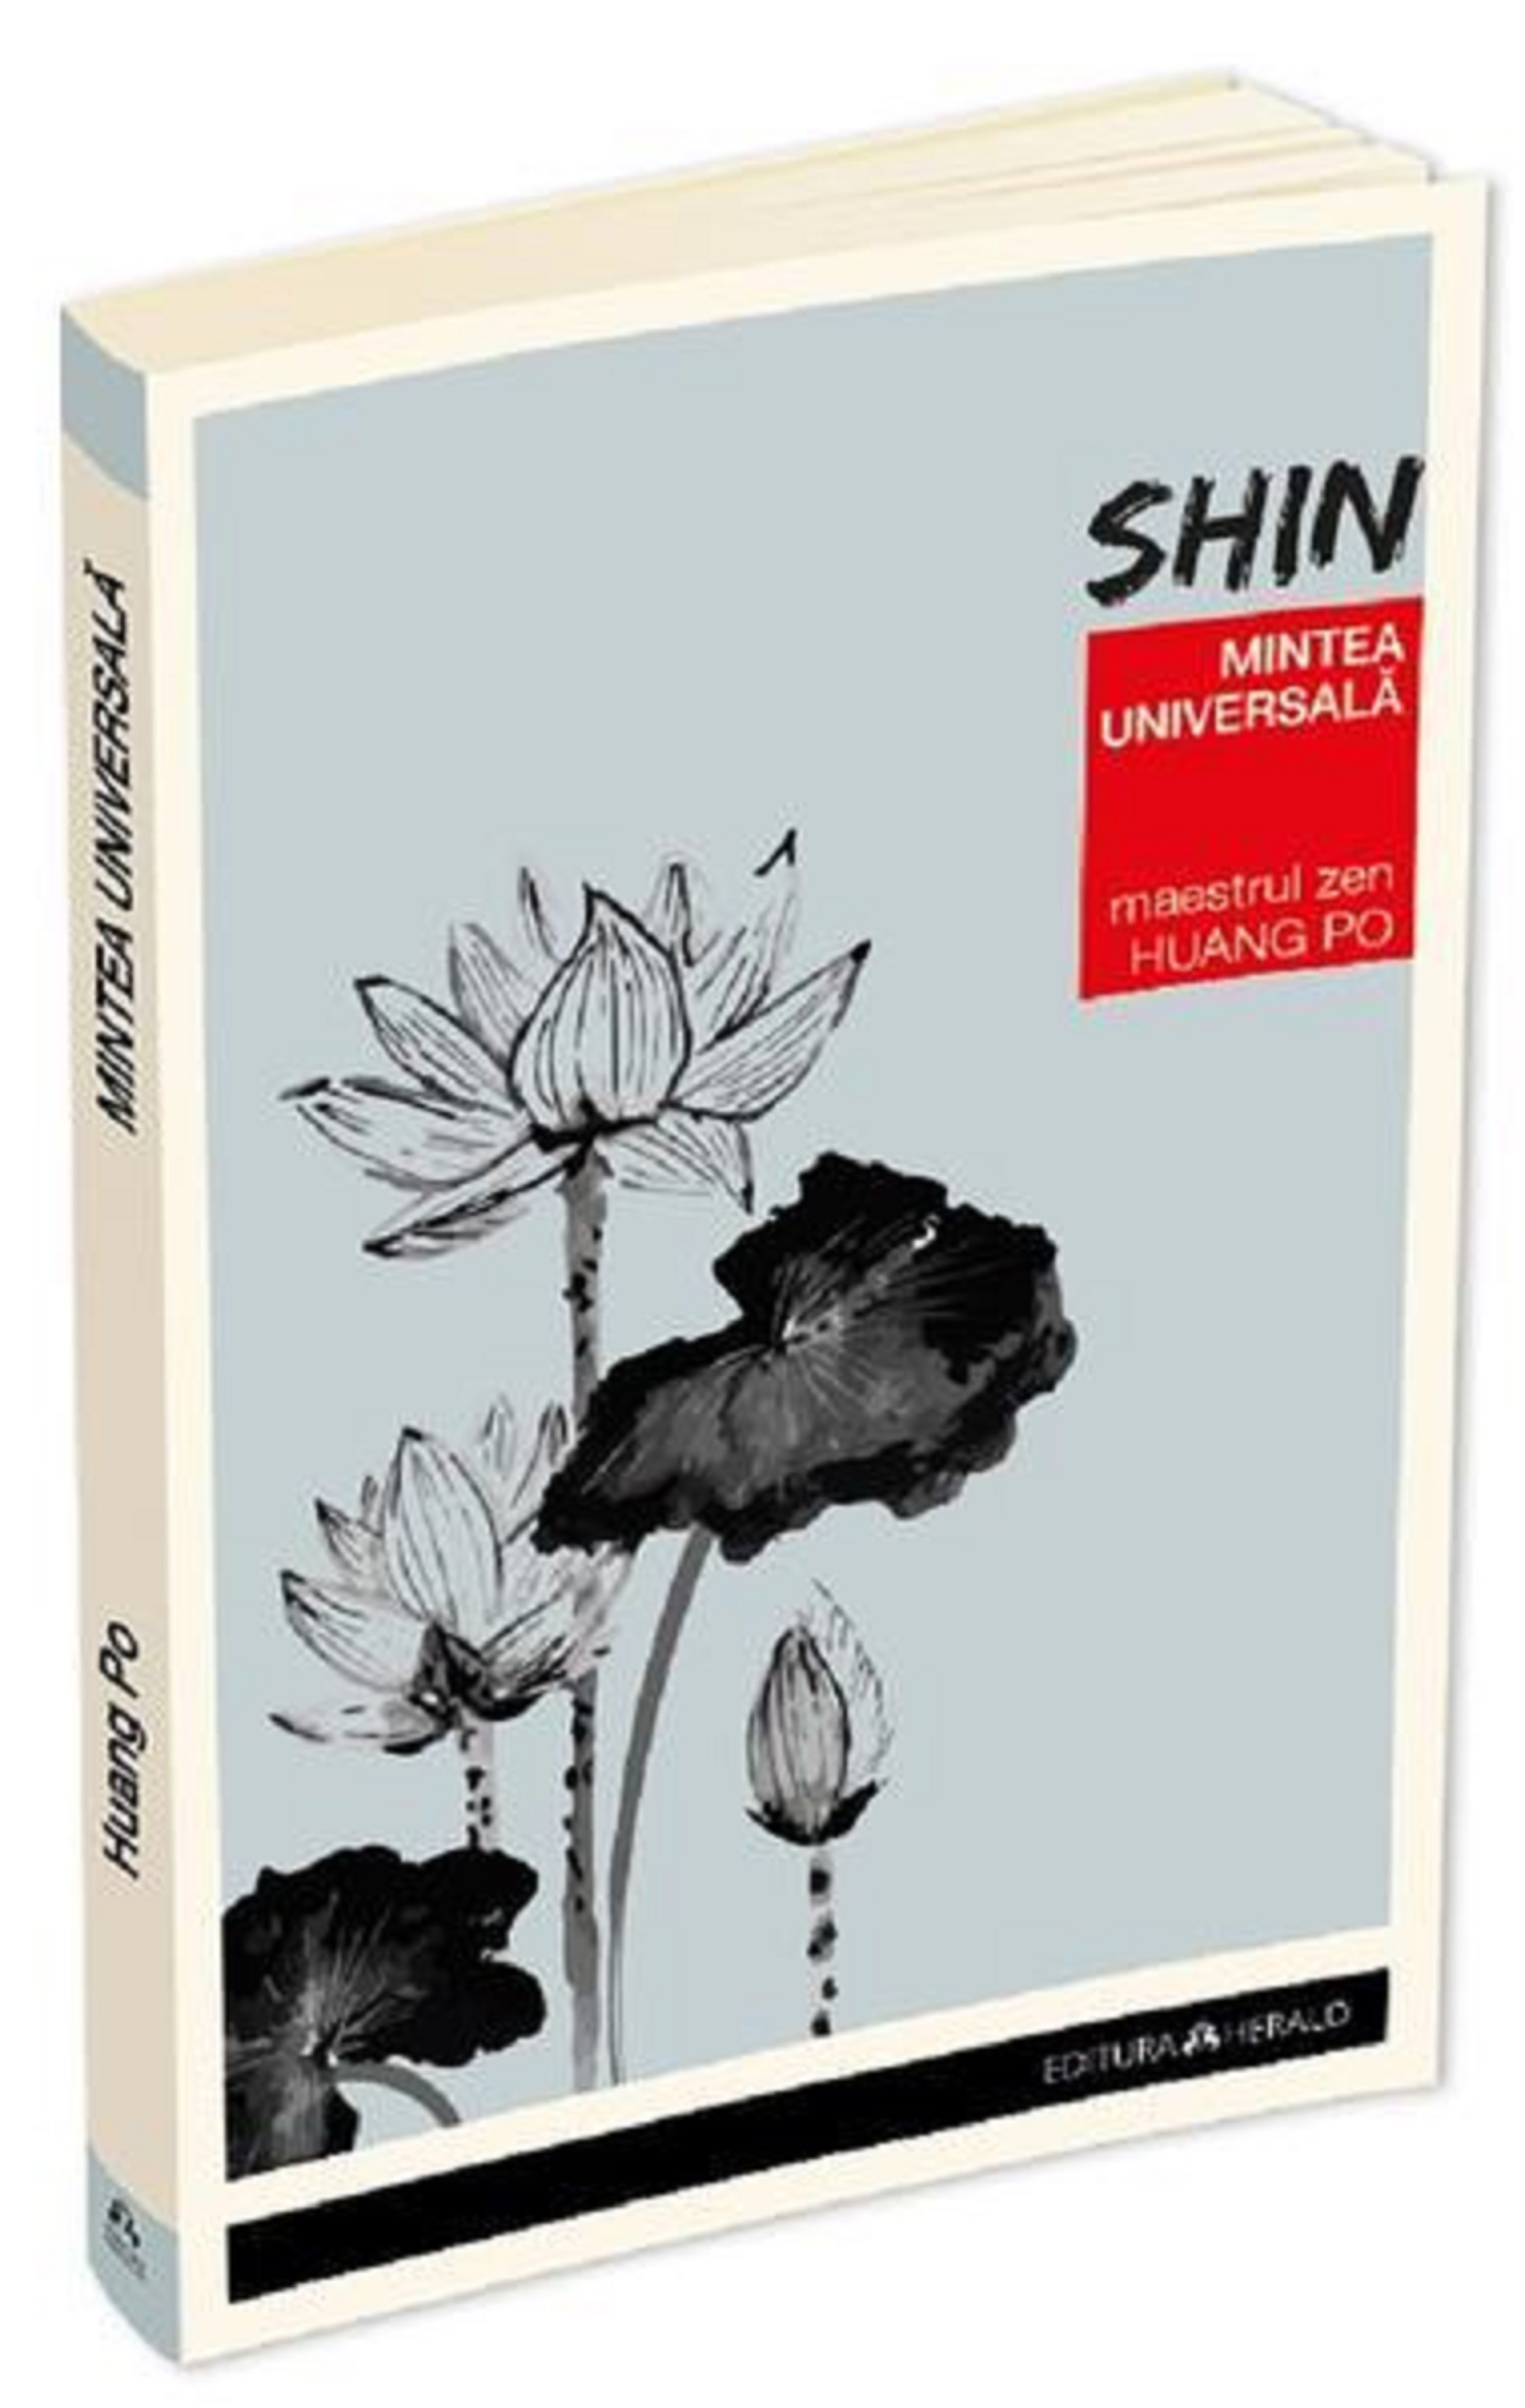 Shin – Mintea Universala | Ser-Huang Poon carte